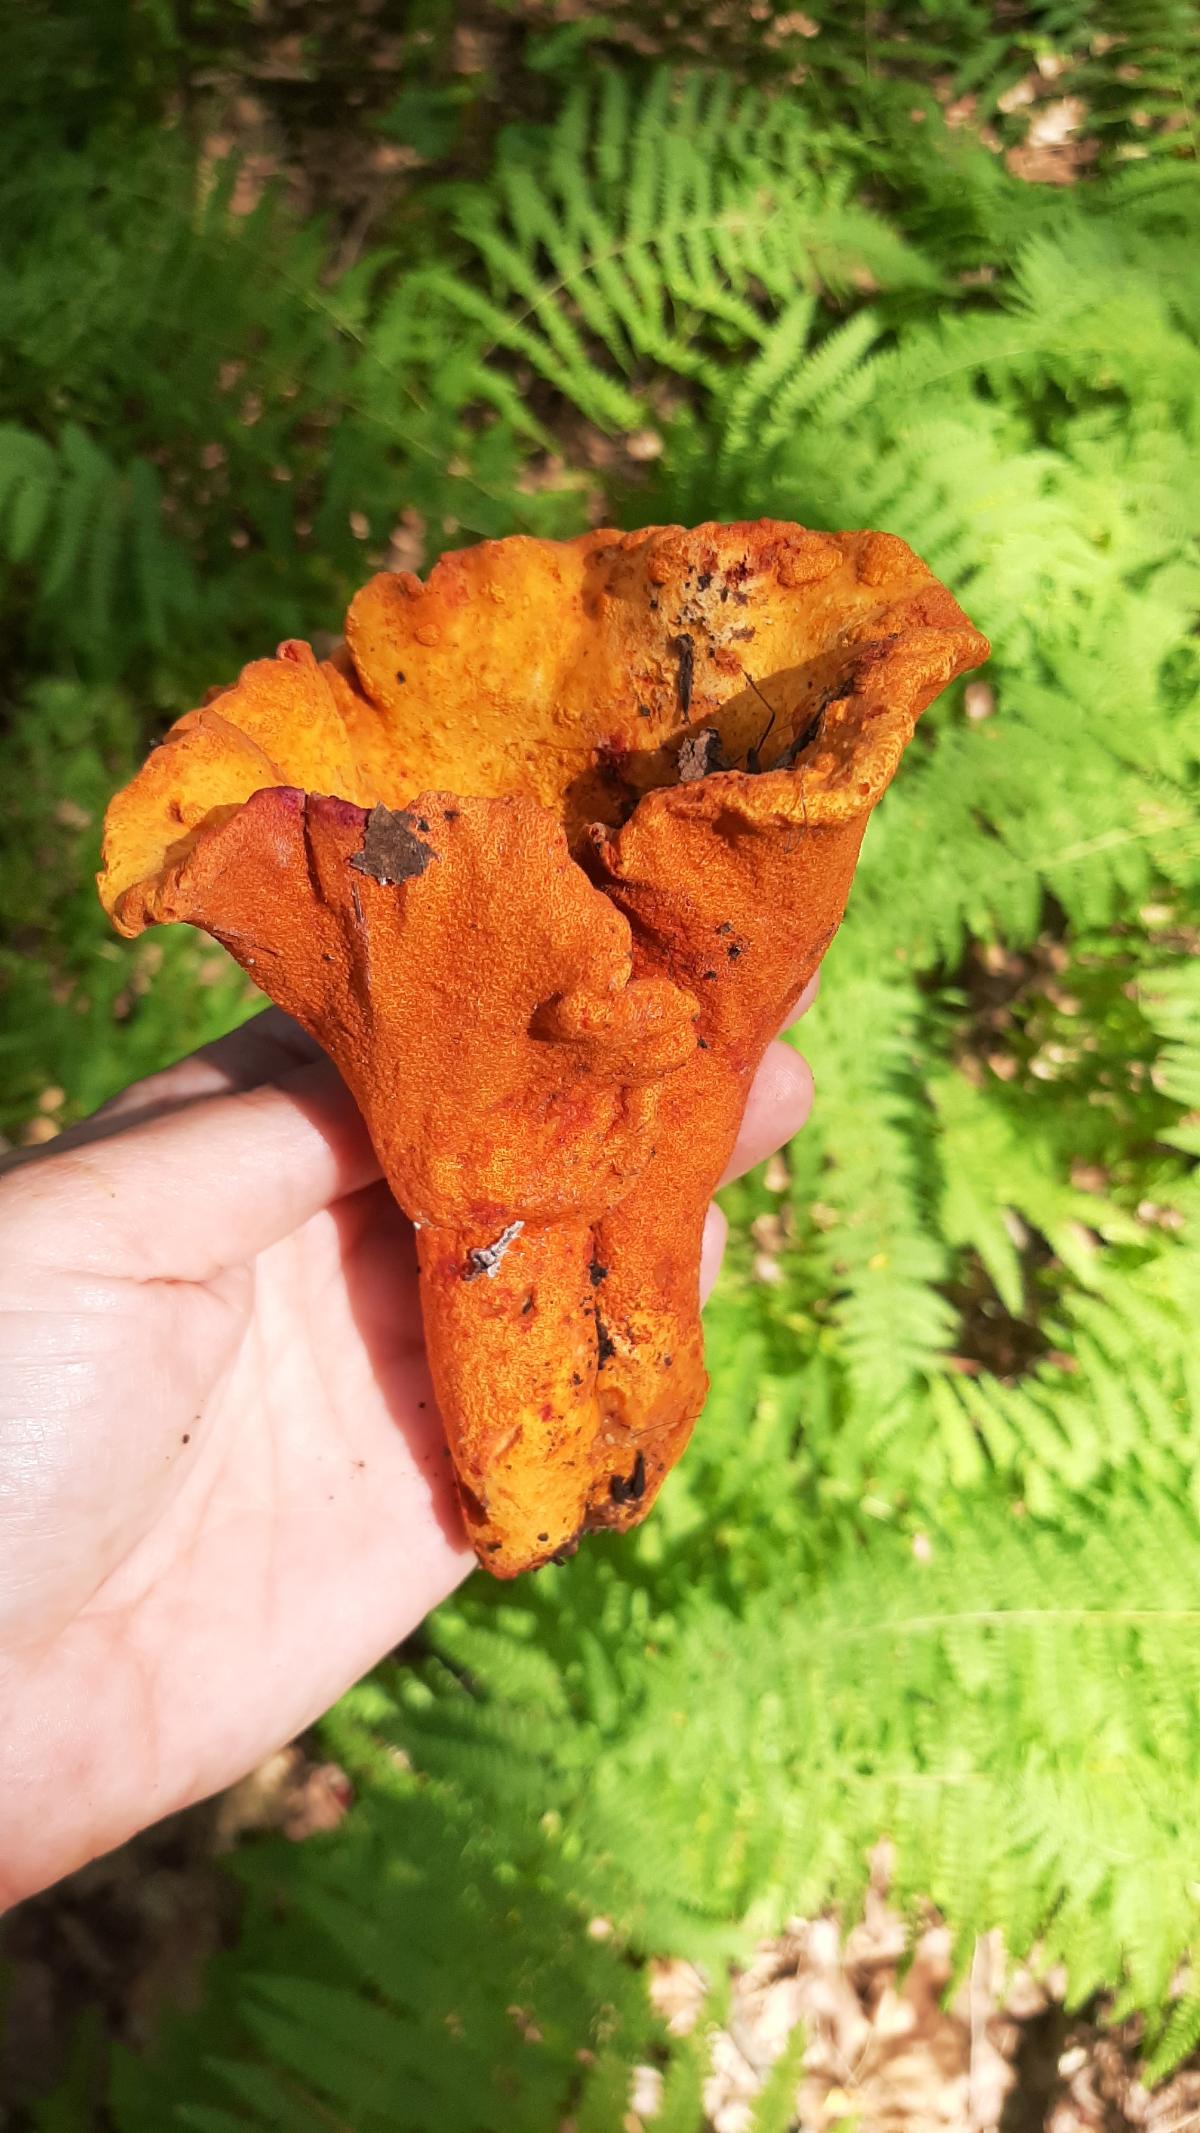 Bright orange lobster mushroom held in hand